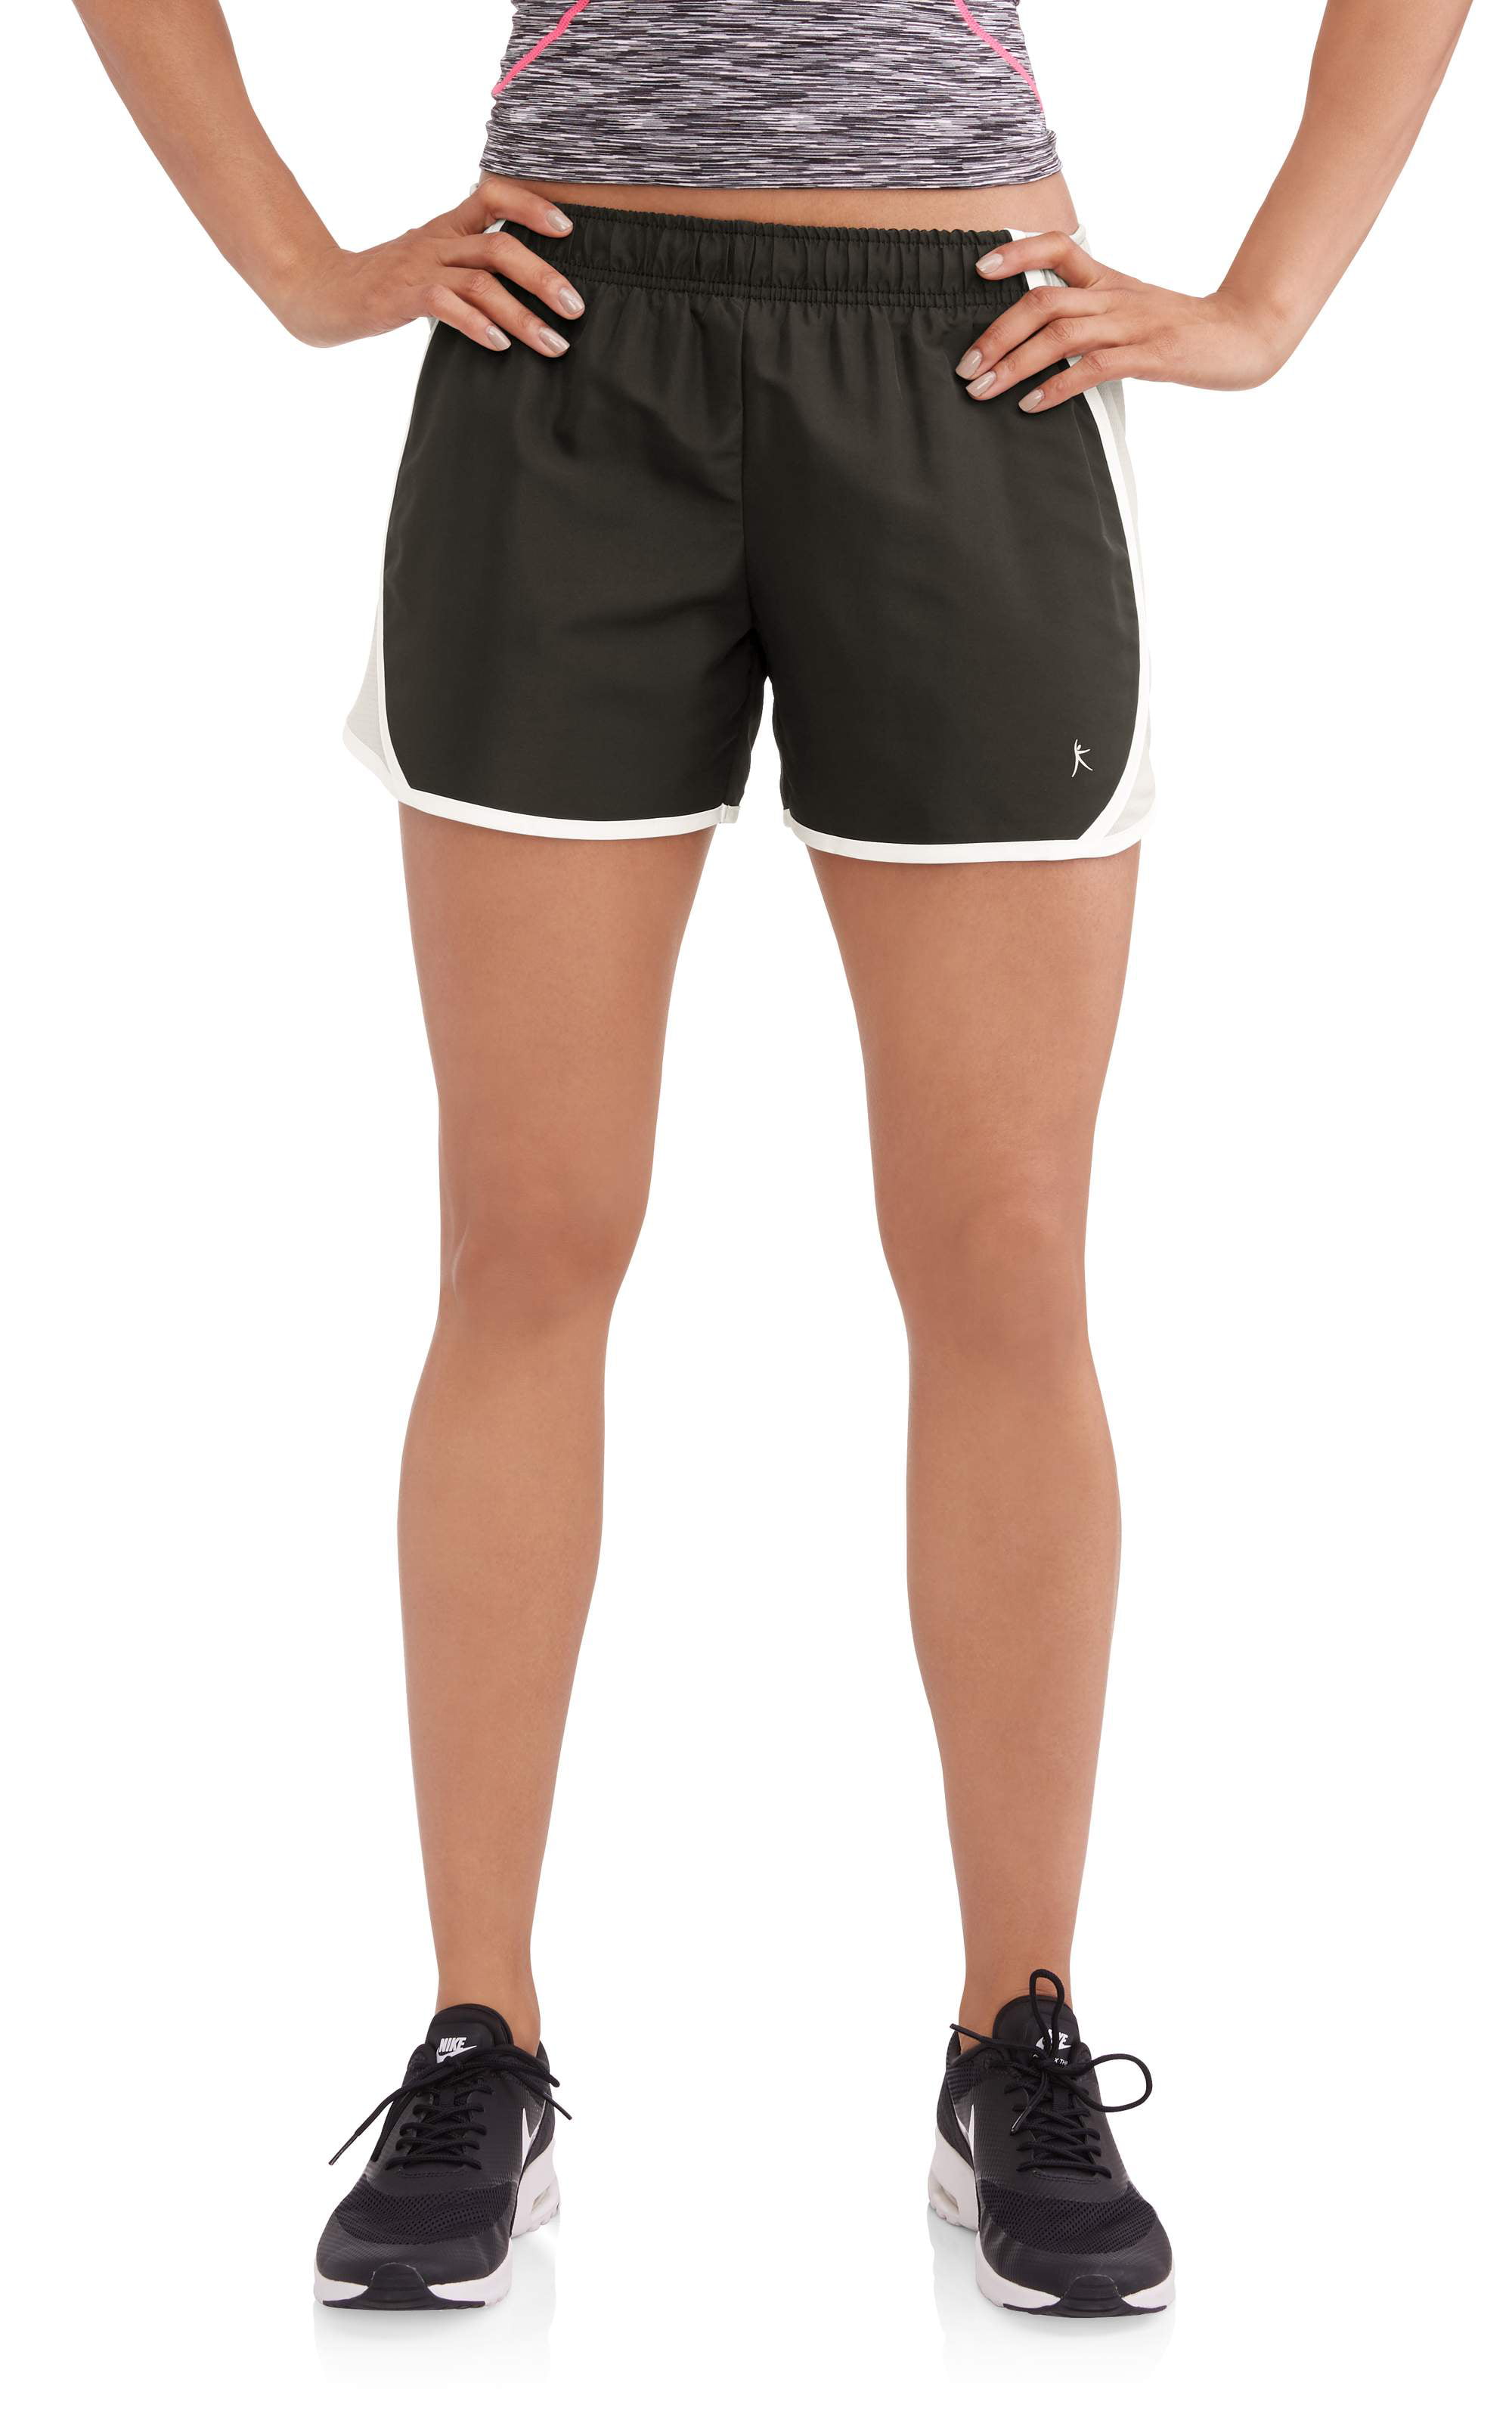 Women's Active Woven Running Shorts With Built-In Liner - Walmart.com